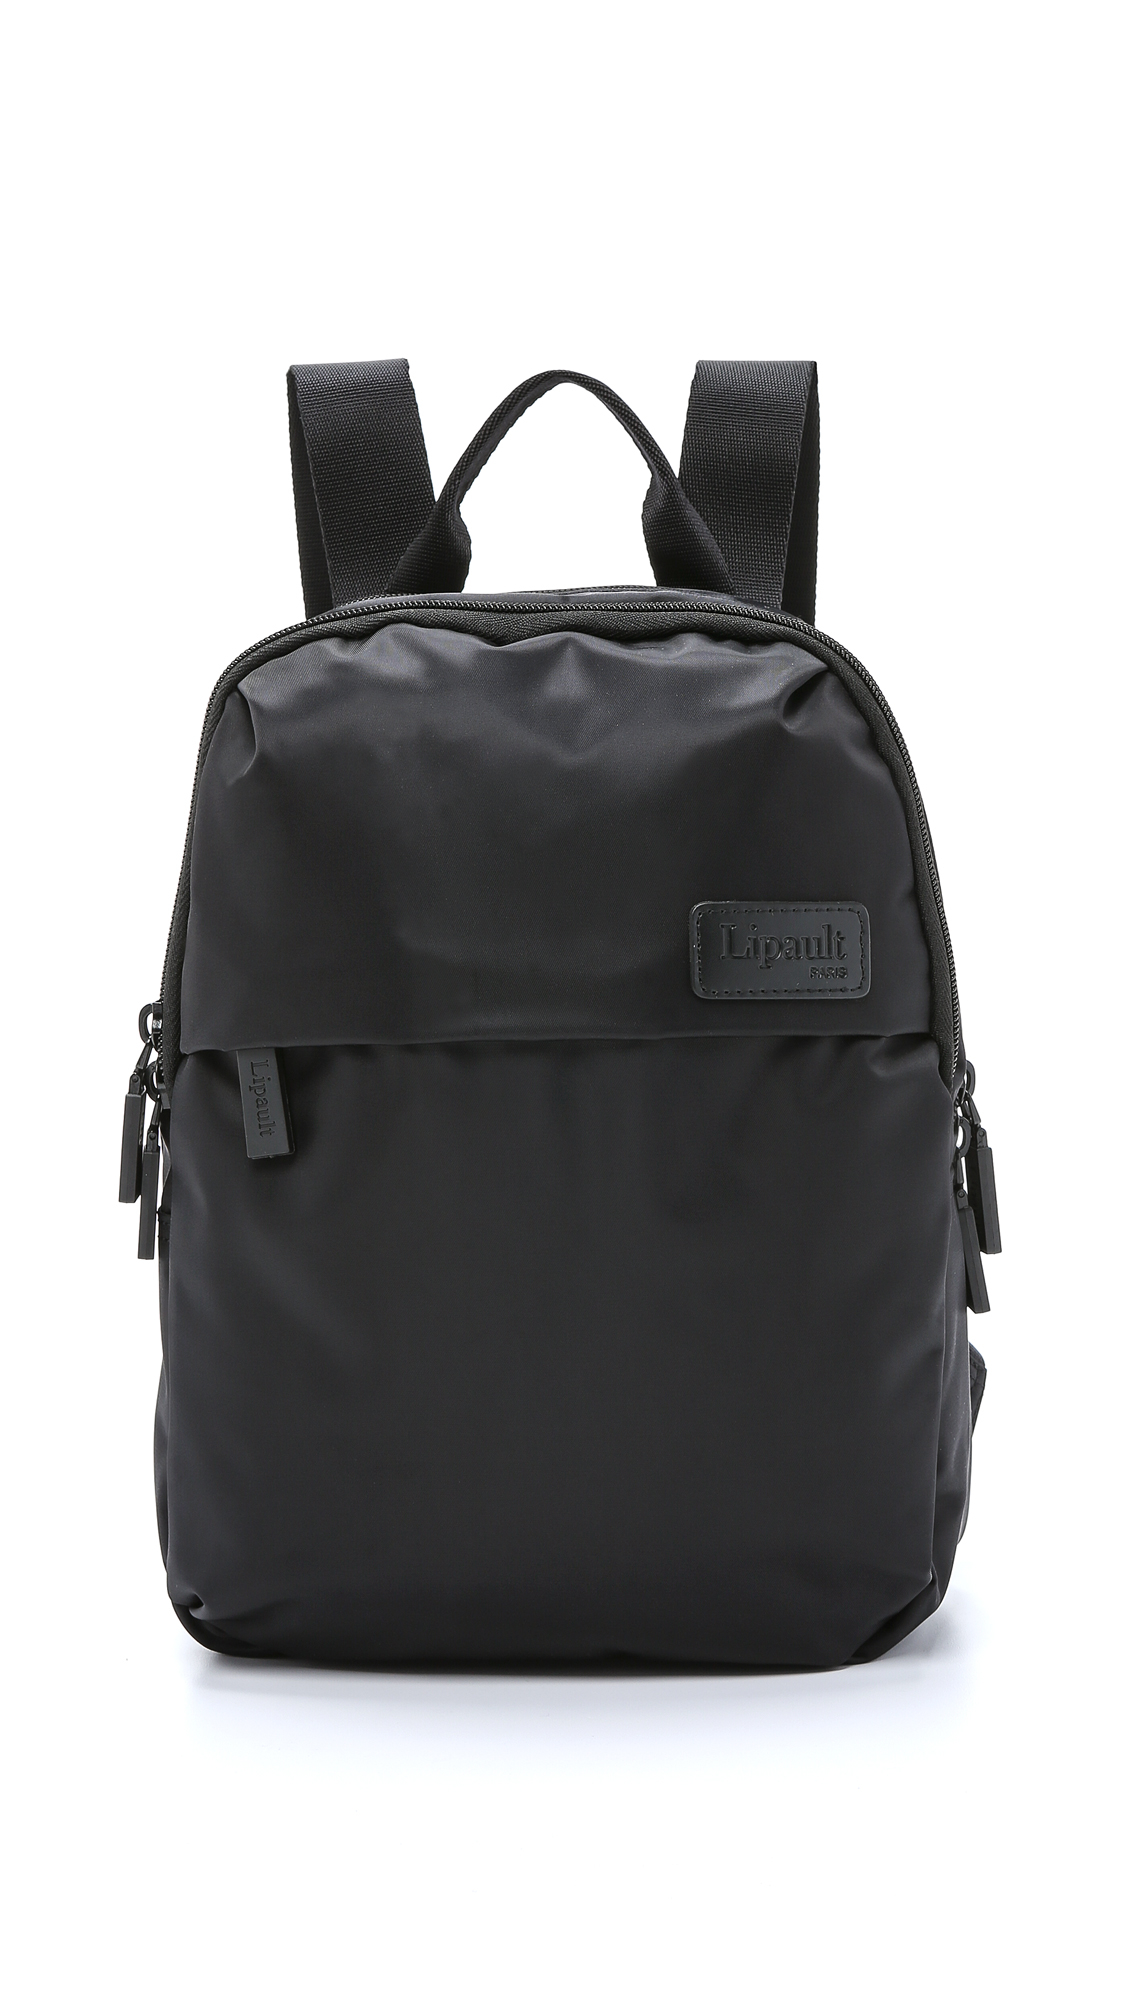 Lyst - Lipault Mini Backpack - Black in Black